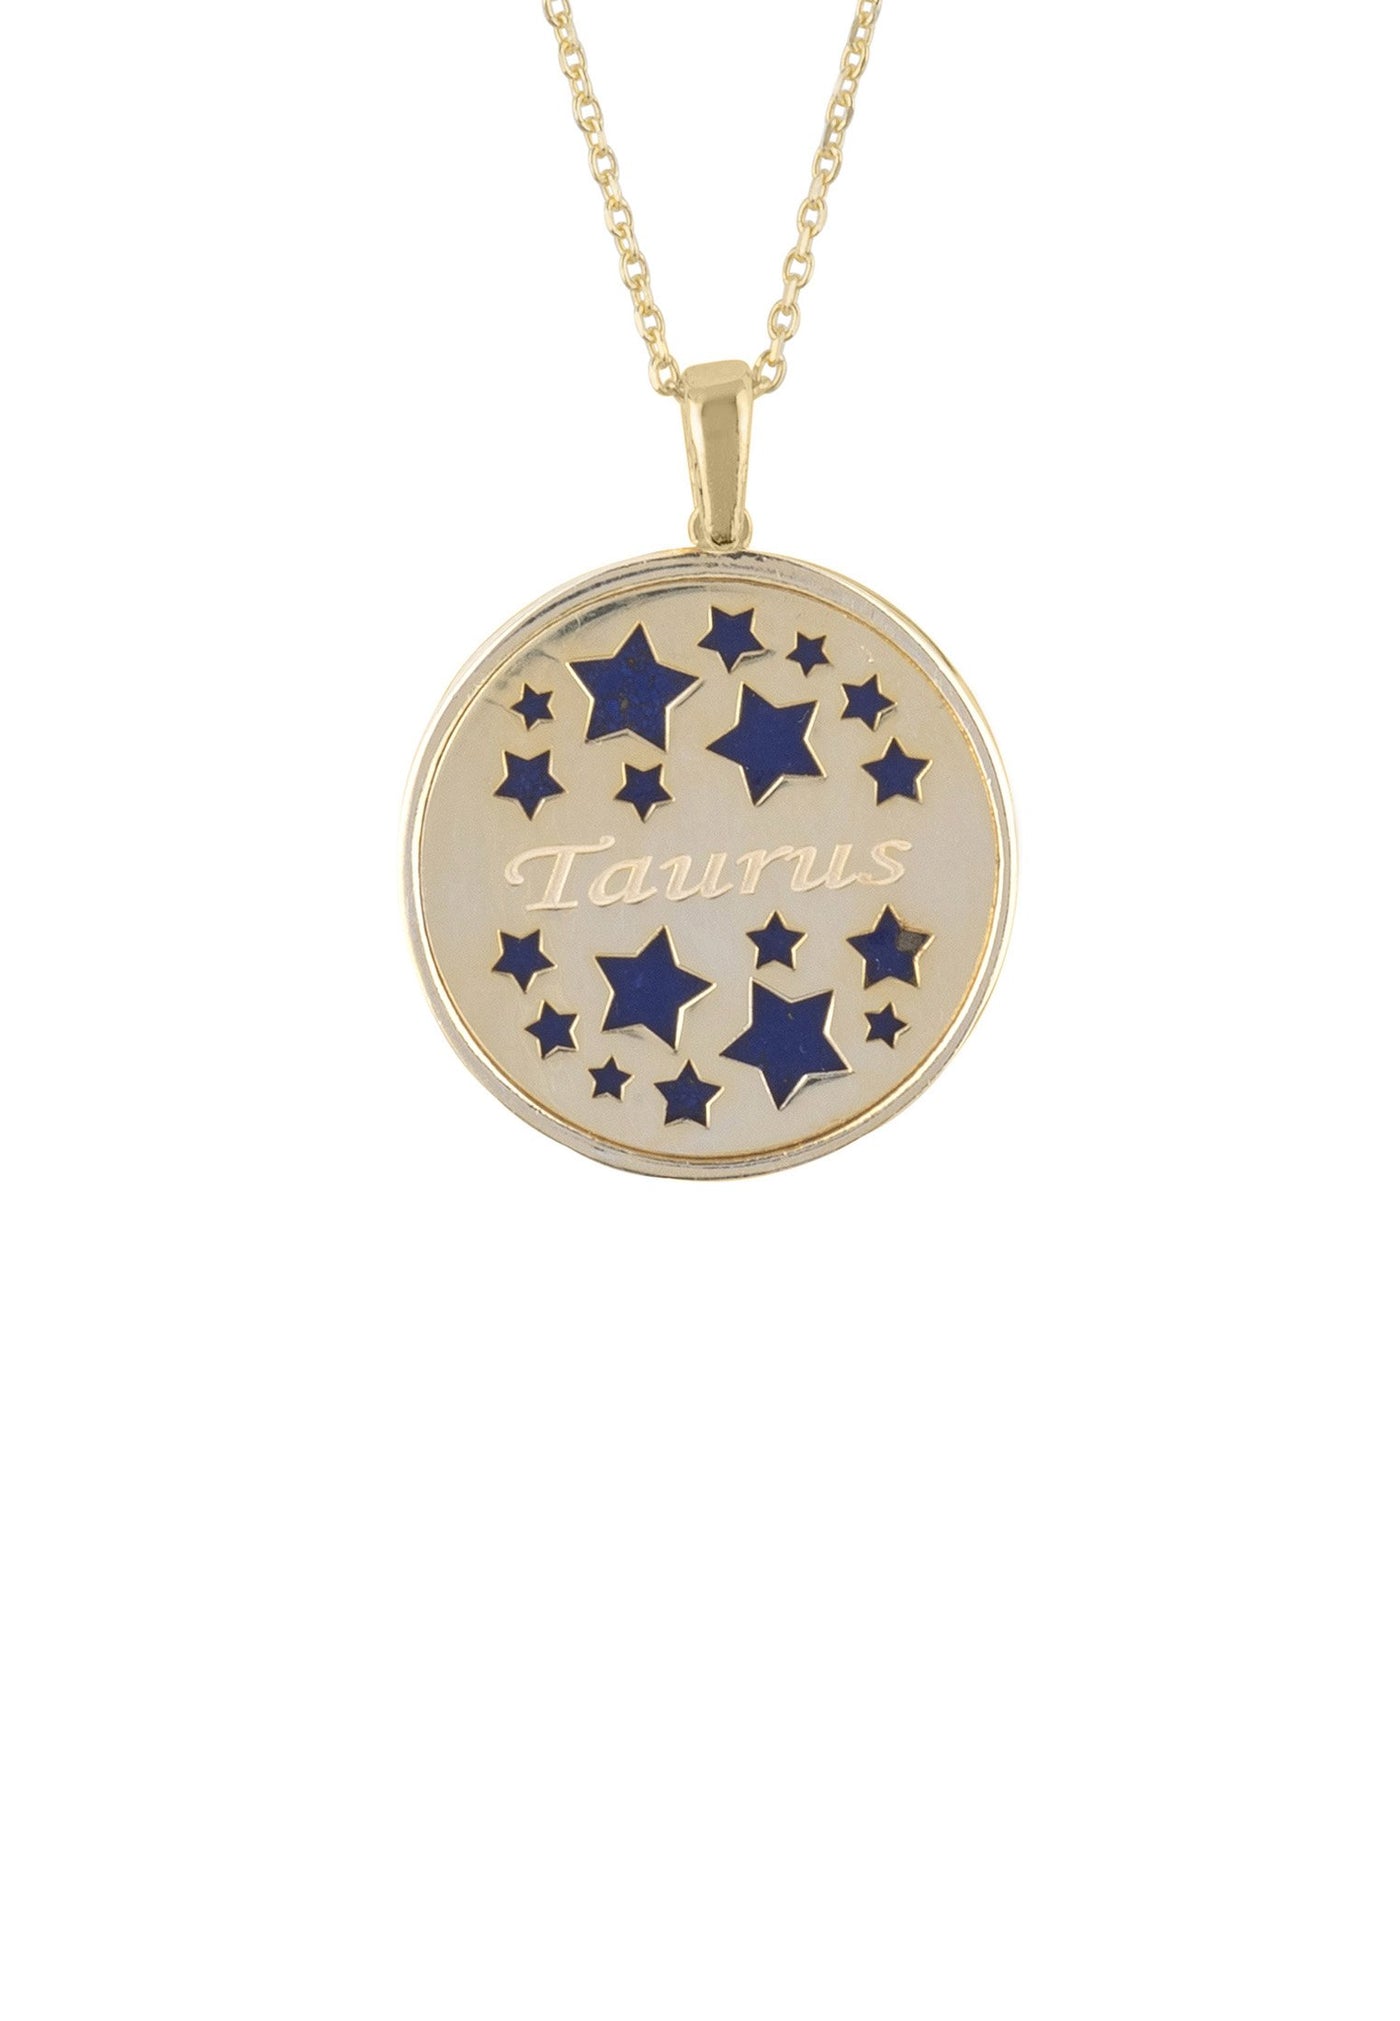 Taurus necklace - 22 carat gold plated - lapis lazuli with white zirconia